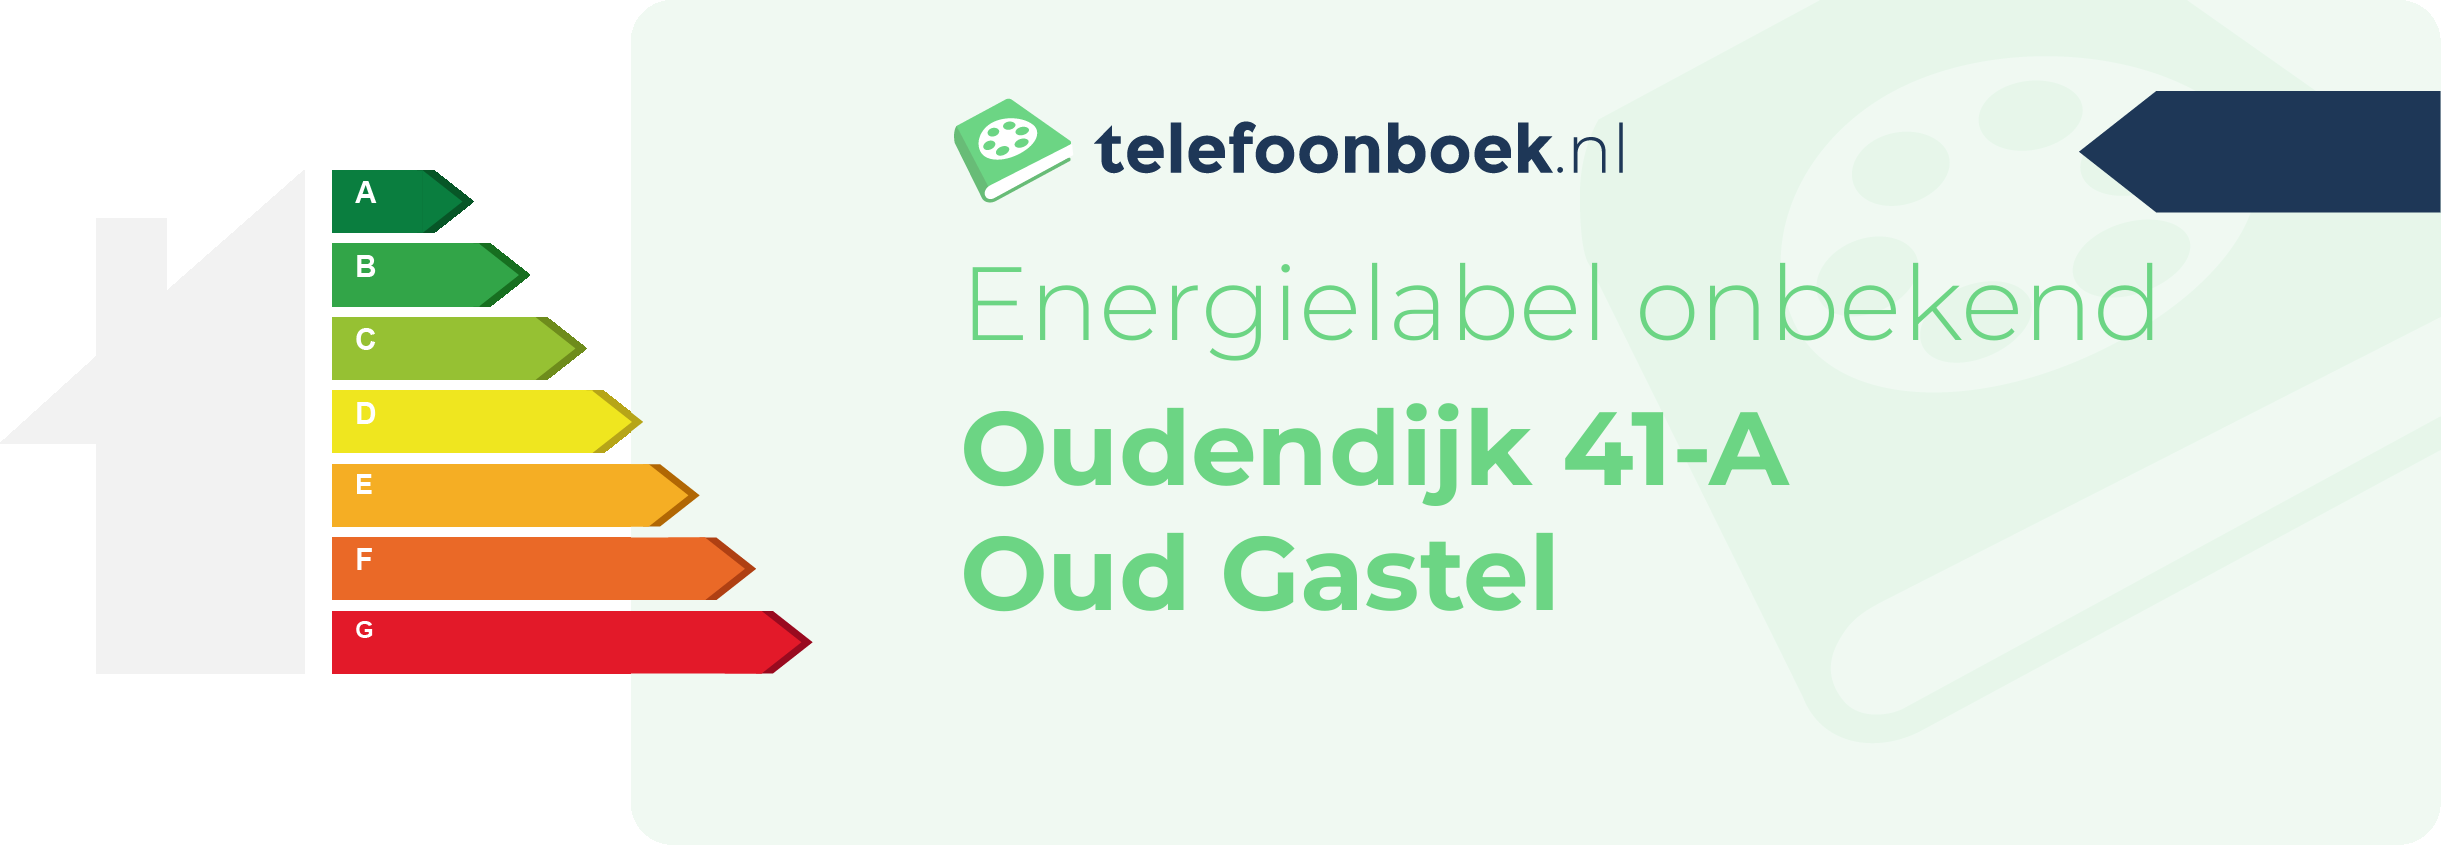 Energielabel Oudendijk 41-A Oud Gastel